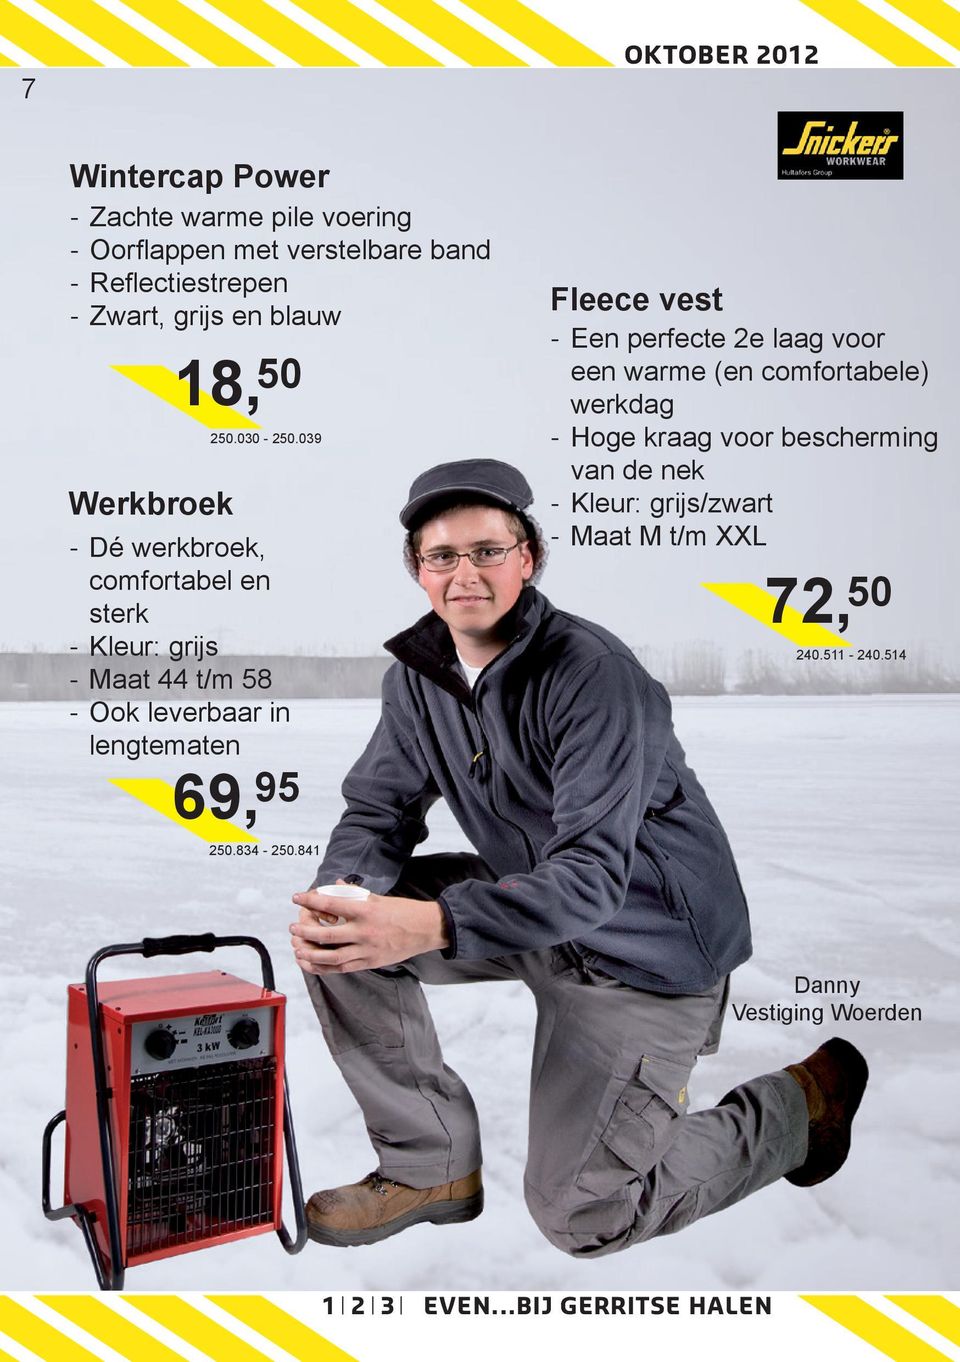 039 Werkbroek - Dé werkbroek, comfortabel en sterk - Kleur: grijs - Maat 44 t/m 58 - Ook leverbaar in lengtematen 69, 95 250.